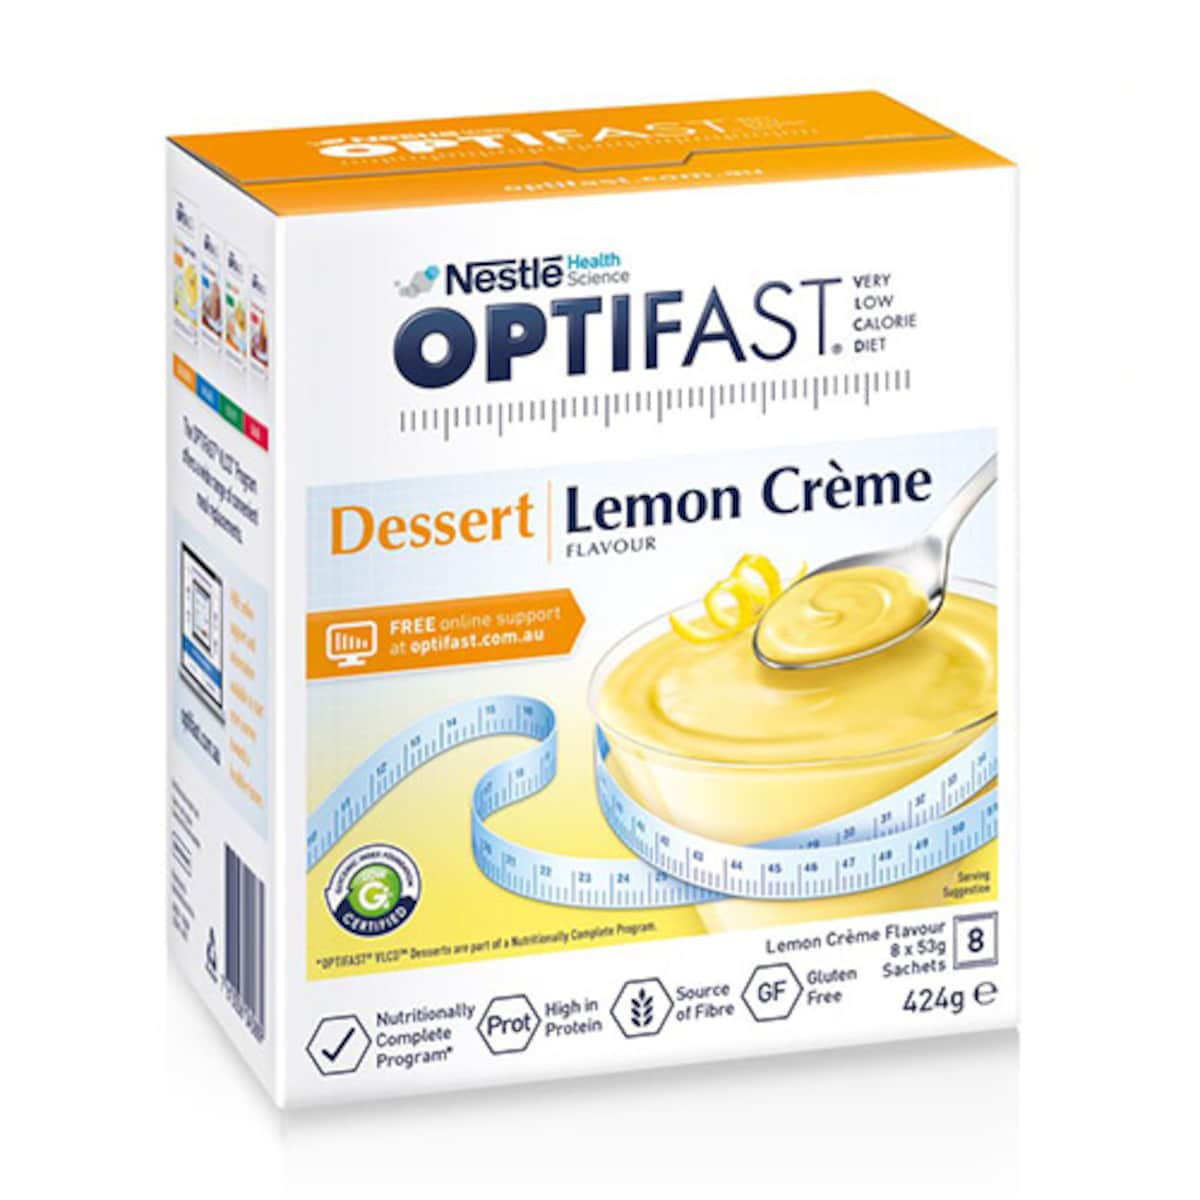 Optifast VLCD Dessert Lemon Creme 8 Serves